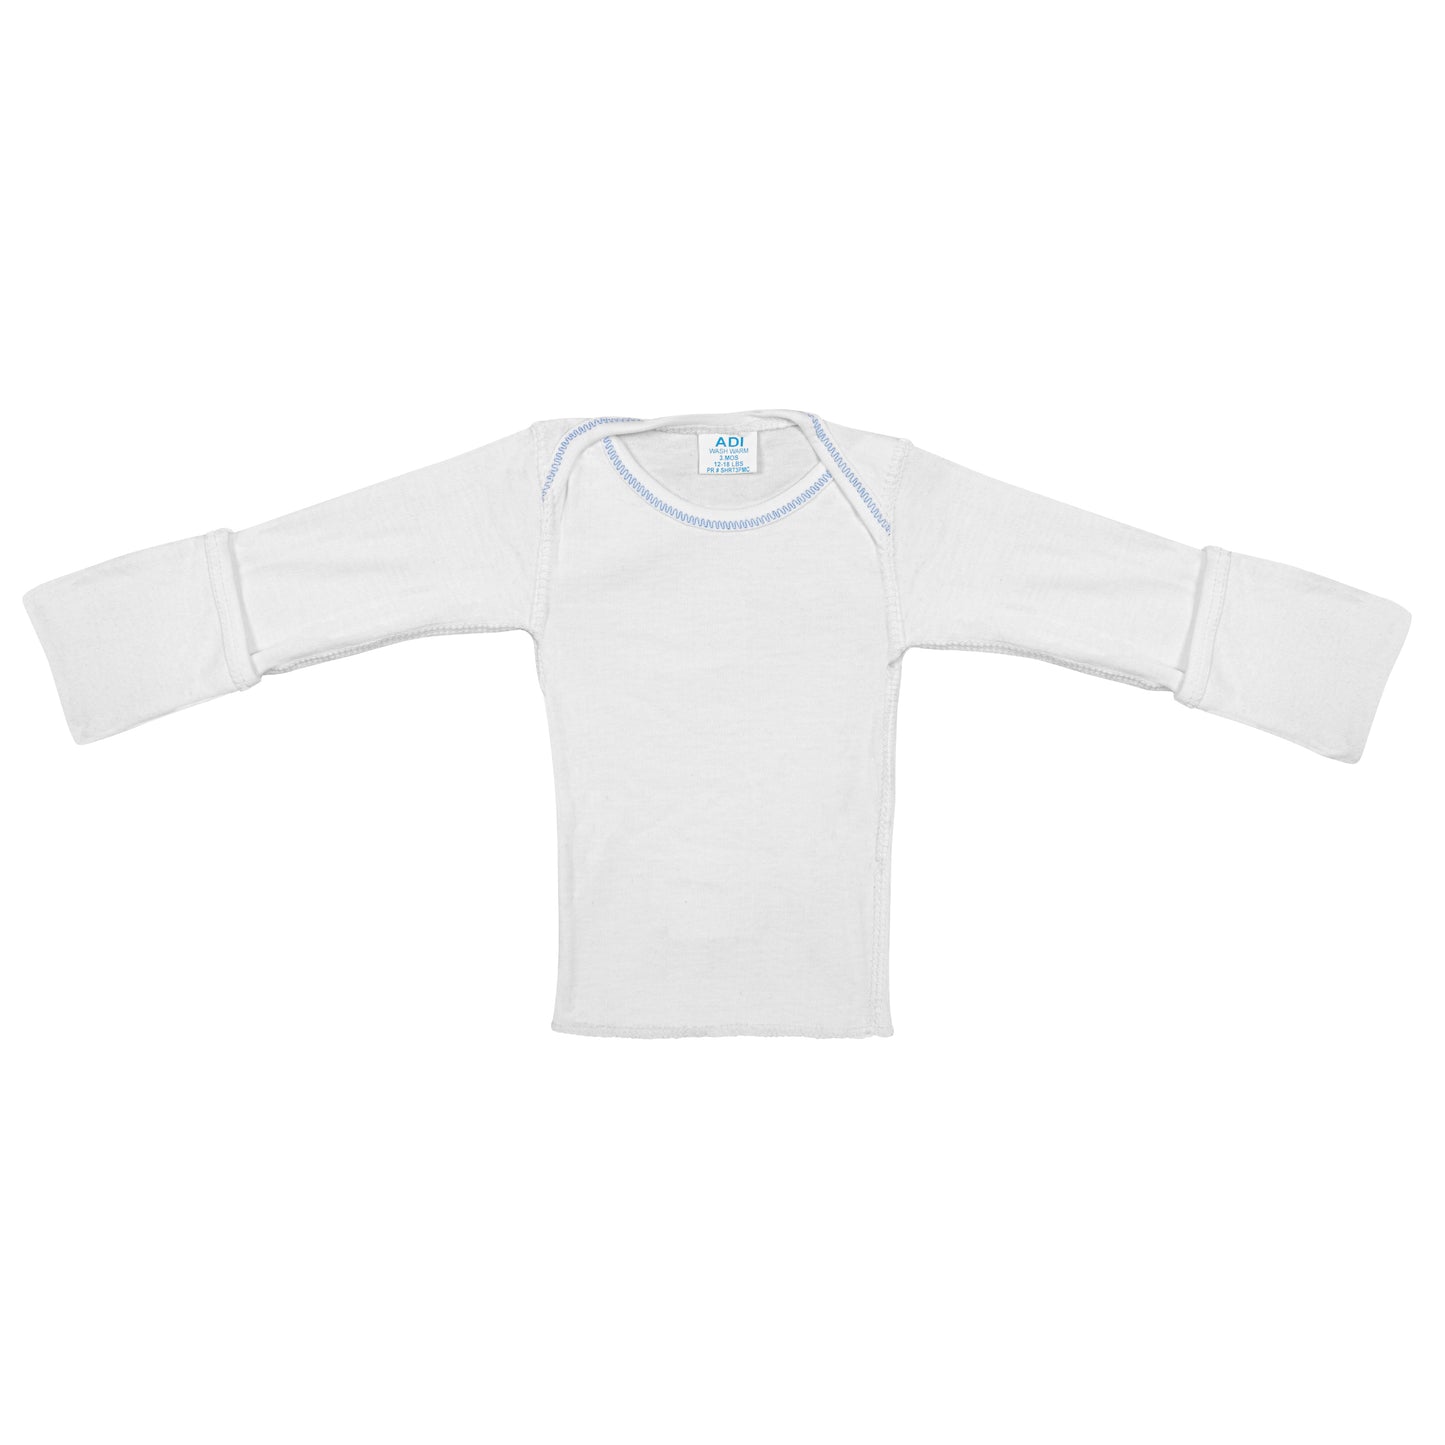 Baby Shirt, Long Sleeve, Mitten Cuff, Pullover, White w/ Blue H, 3 Months